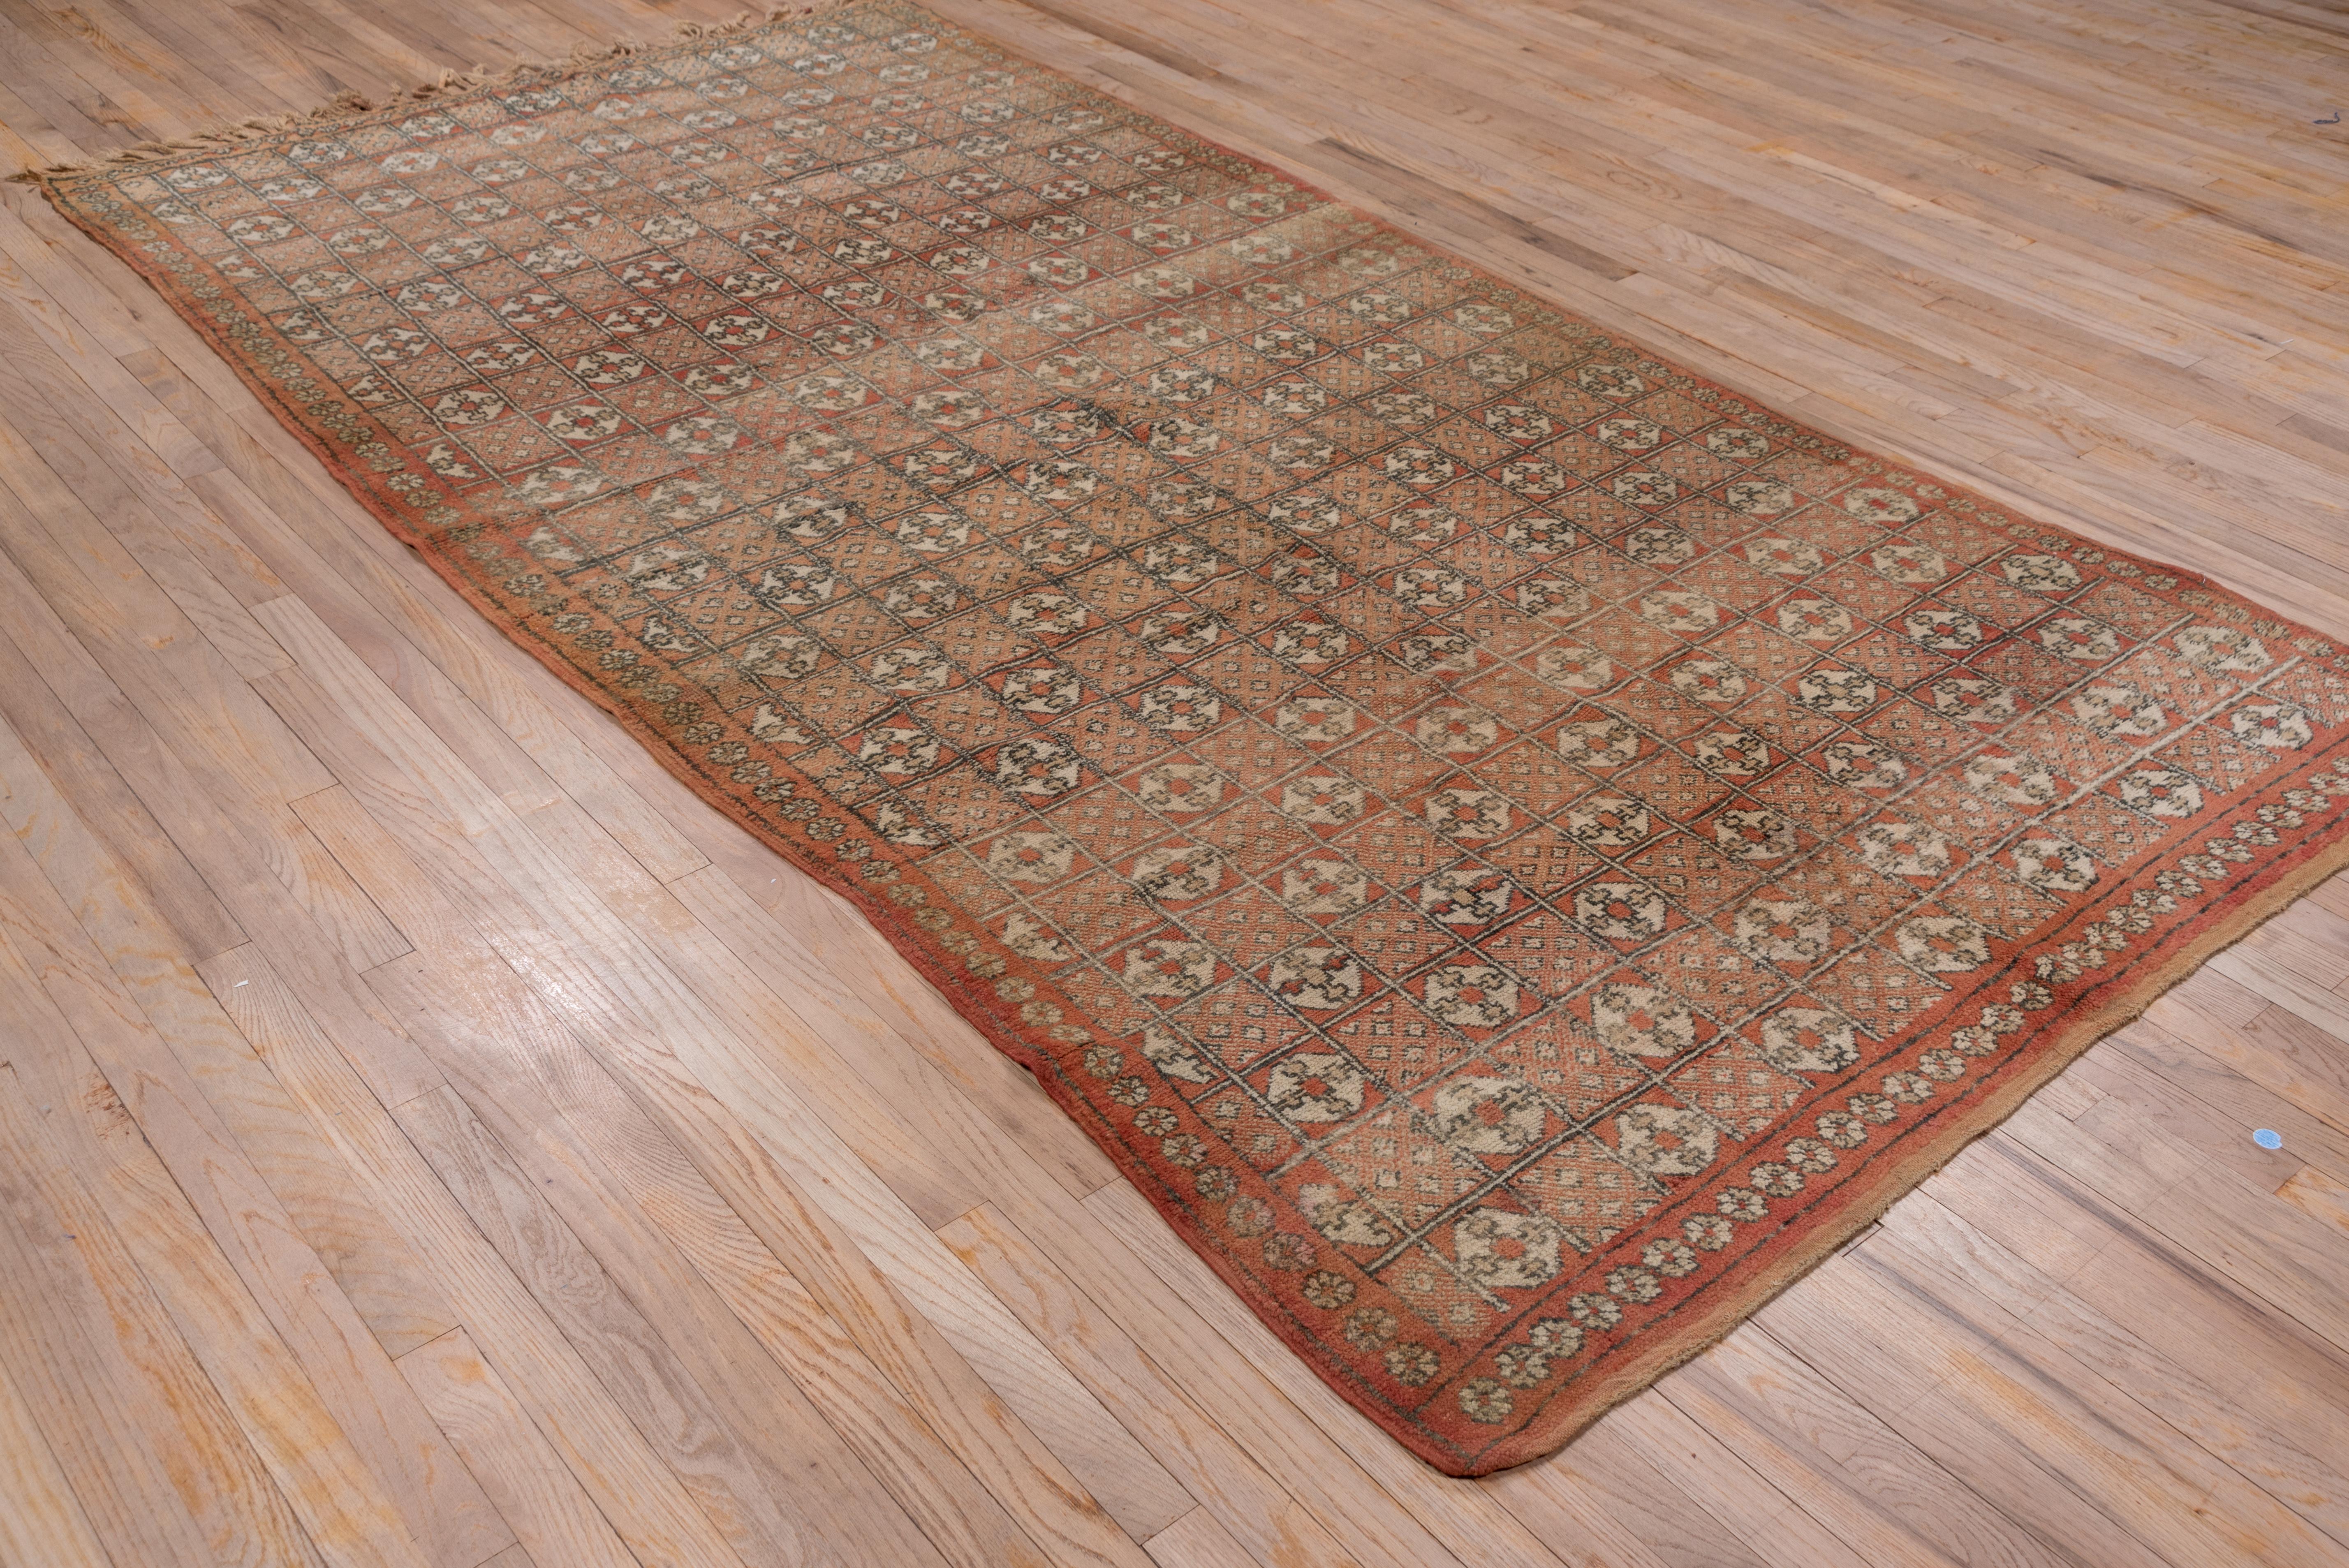 Wool Vintage Red Moroccan Carpet